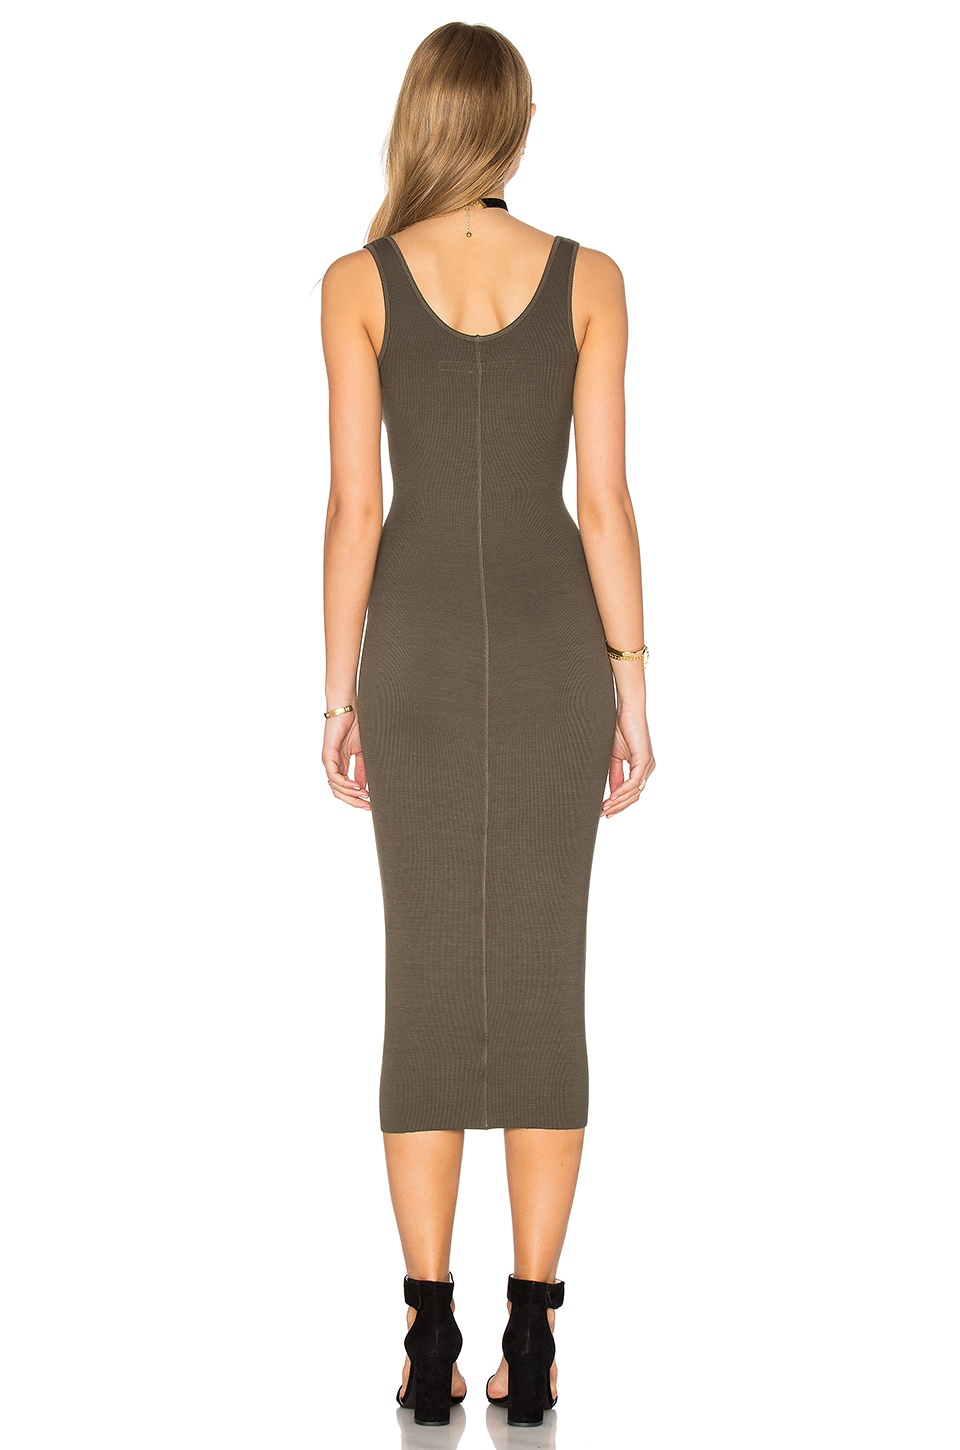 ENZA COSTA Silk Rib Tank Dress, Olive Drab | ModeSens